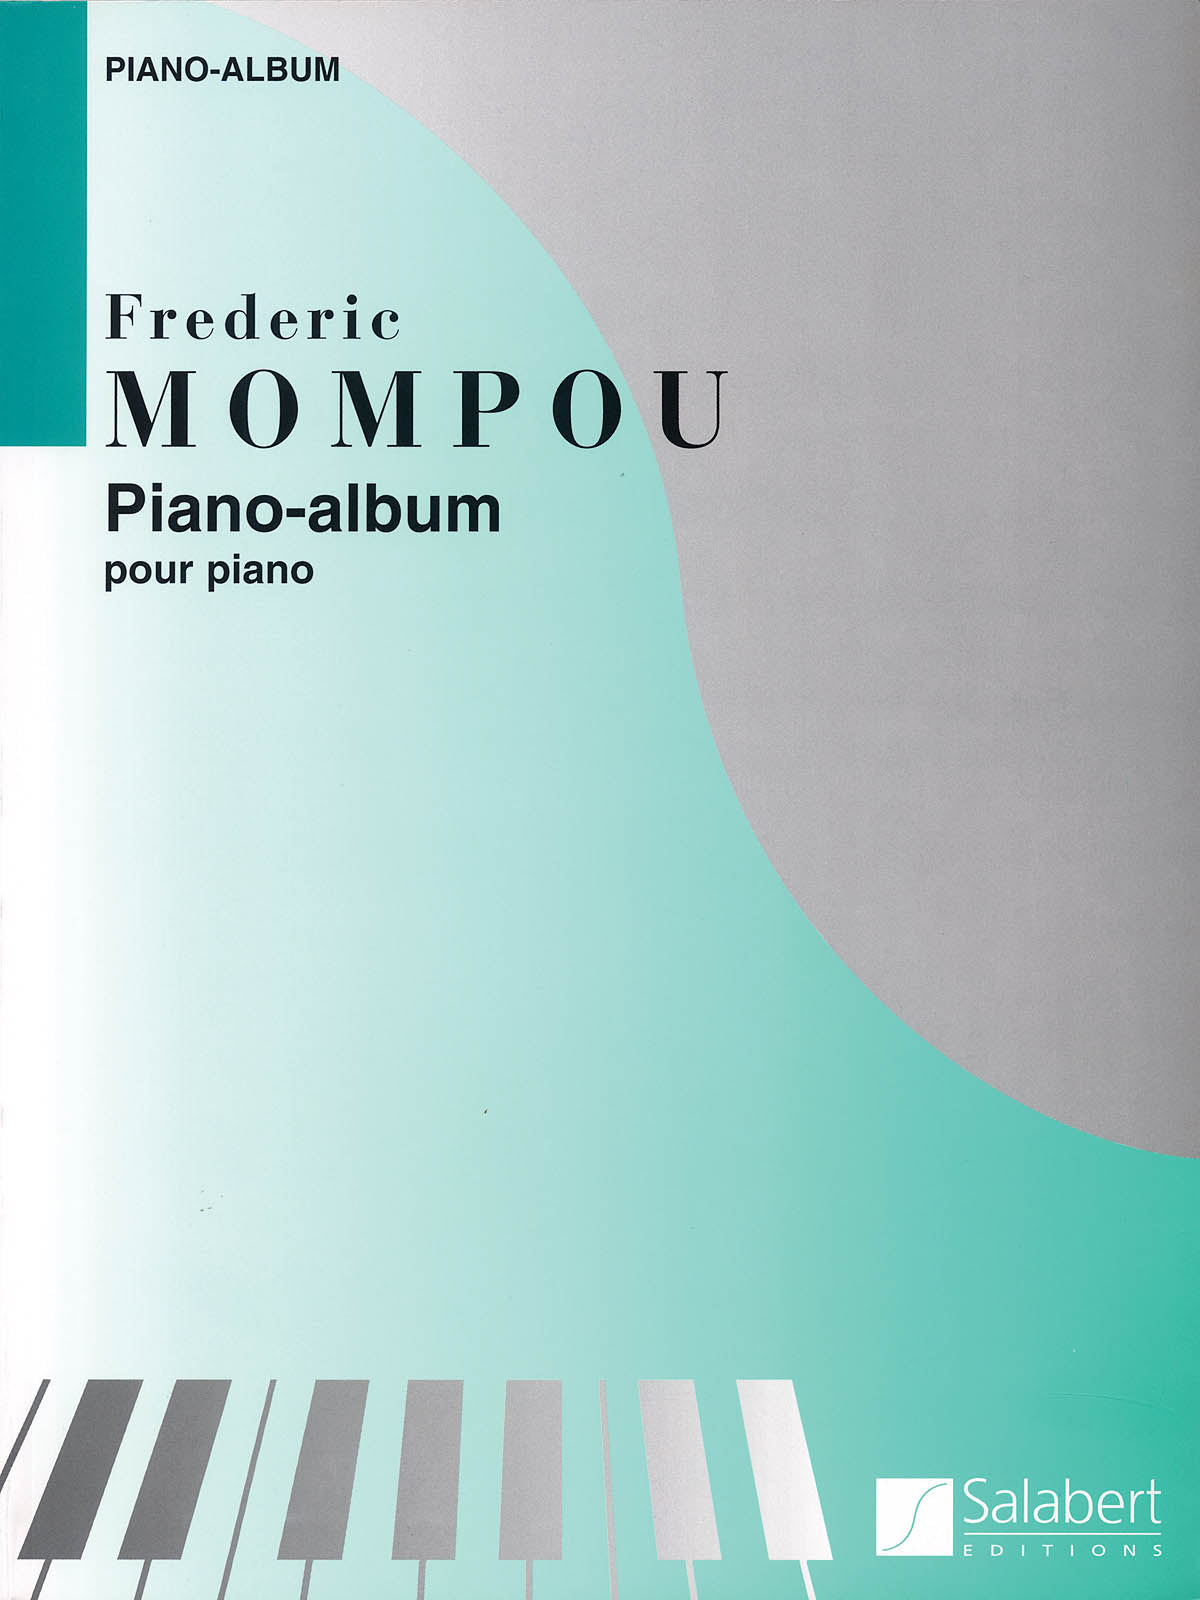 Mompou: Piano Album